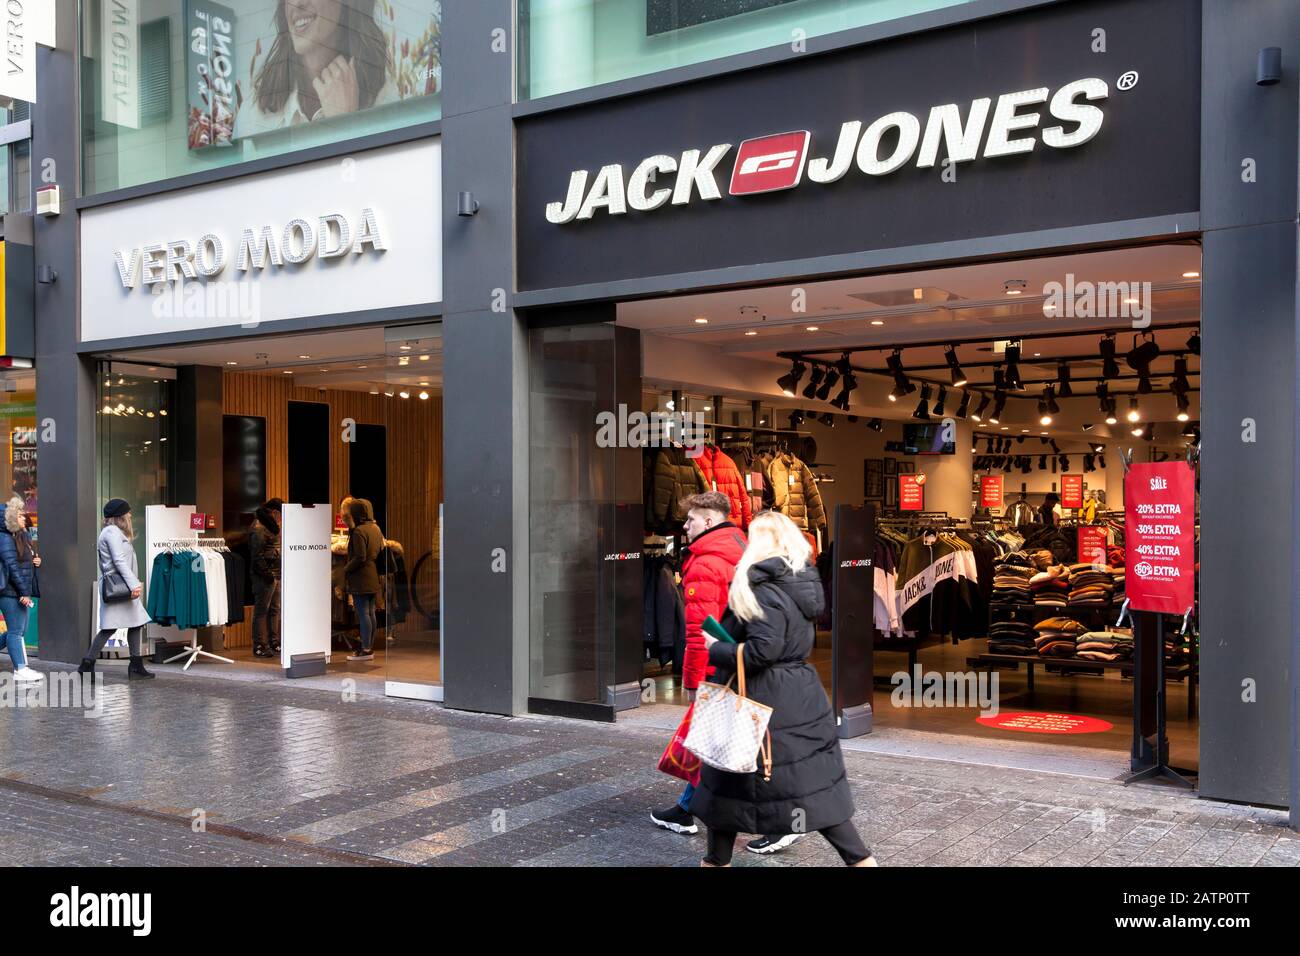 Magasins Vero Moda et Jack & Jones dans la rue commerçante Hohe Strasse, Cologne, Allemagne. Vero Moda und Jack & Jones Laeden auf der Einkaufsstrasse Ho Banque D'Images